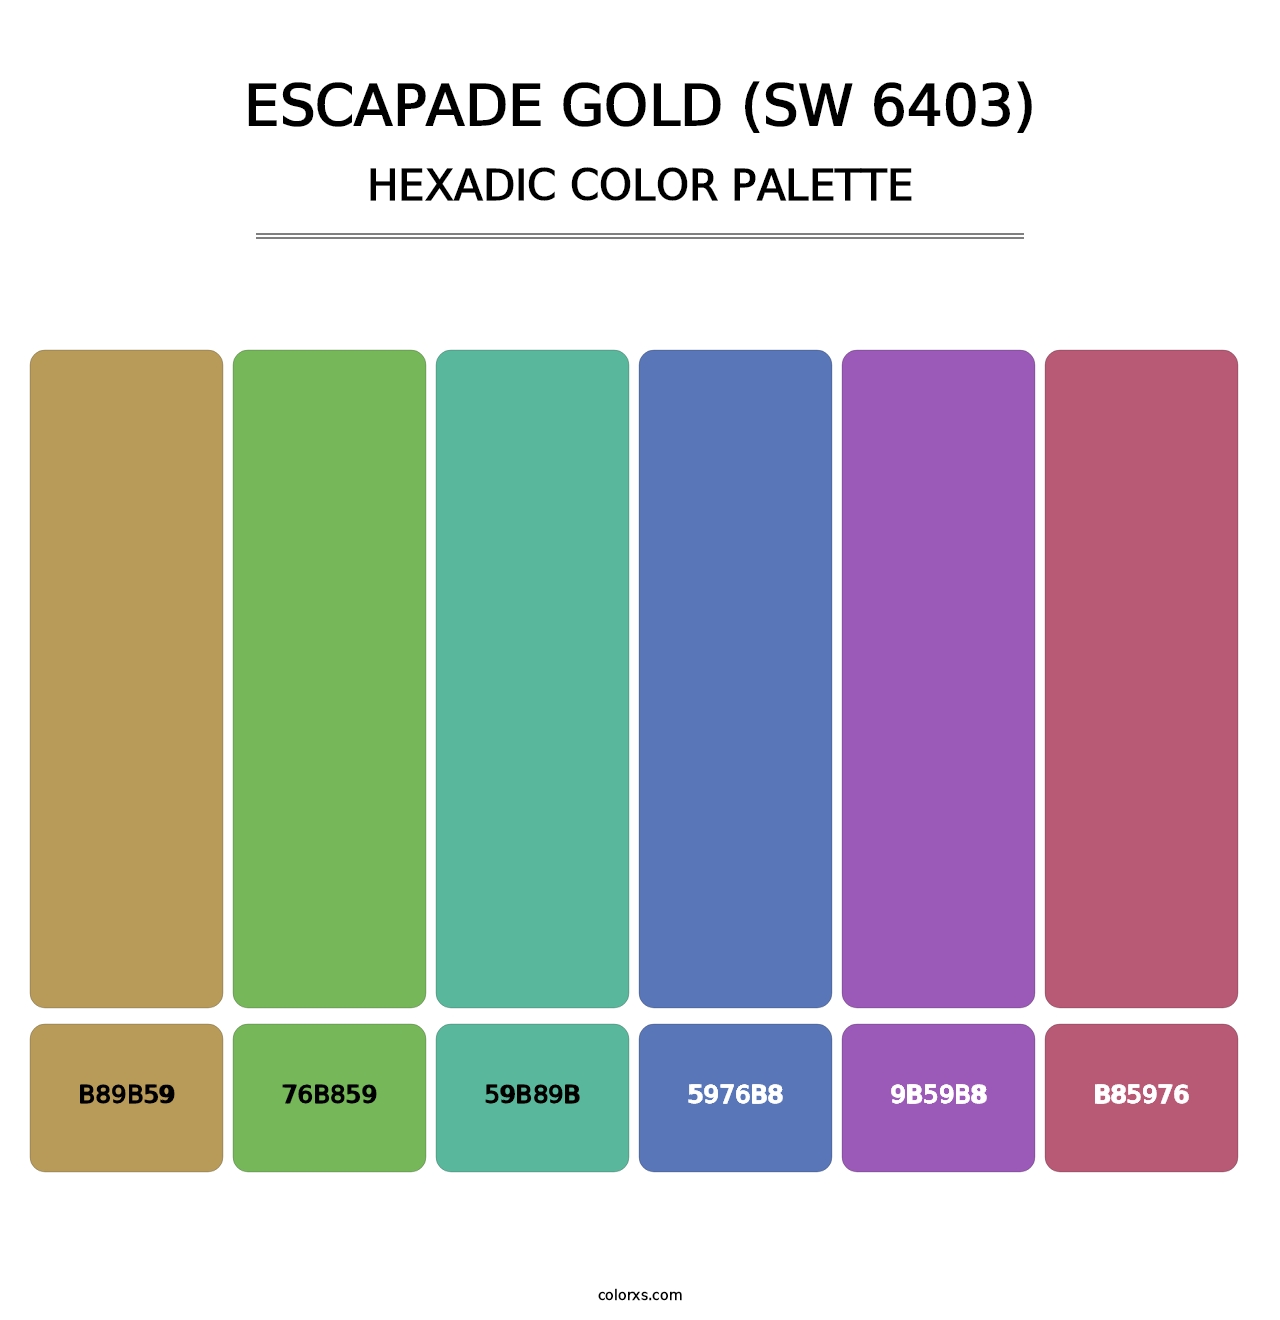 Escapade Gold (SW 6403) - Hexadic Color Palette